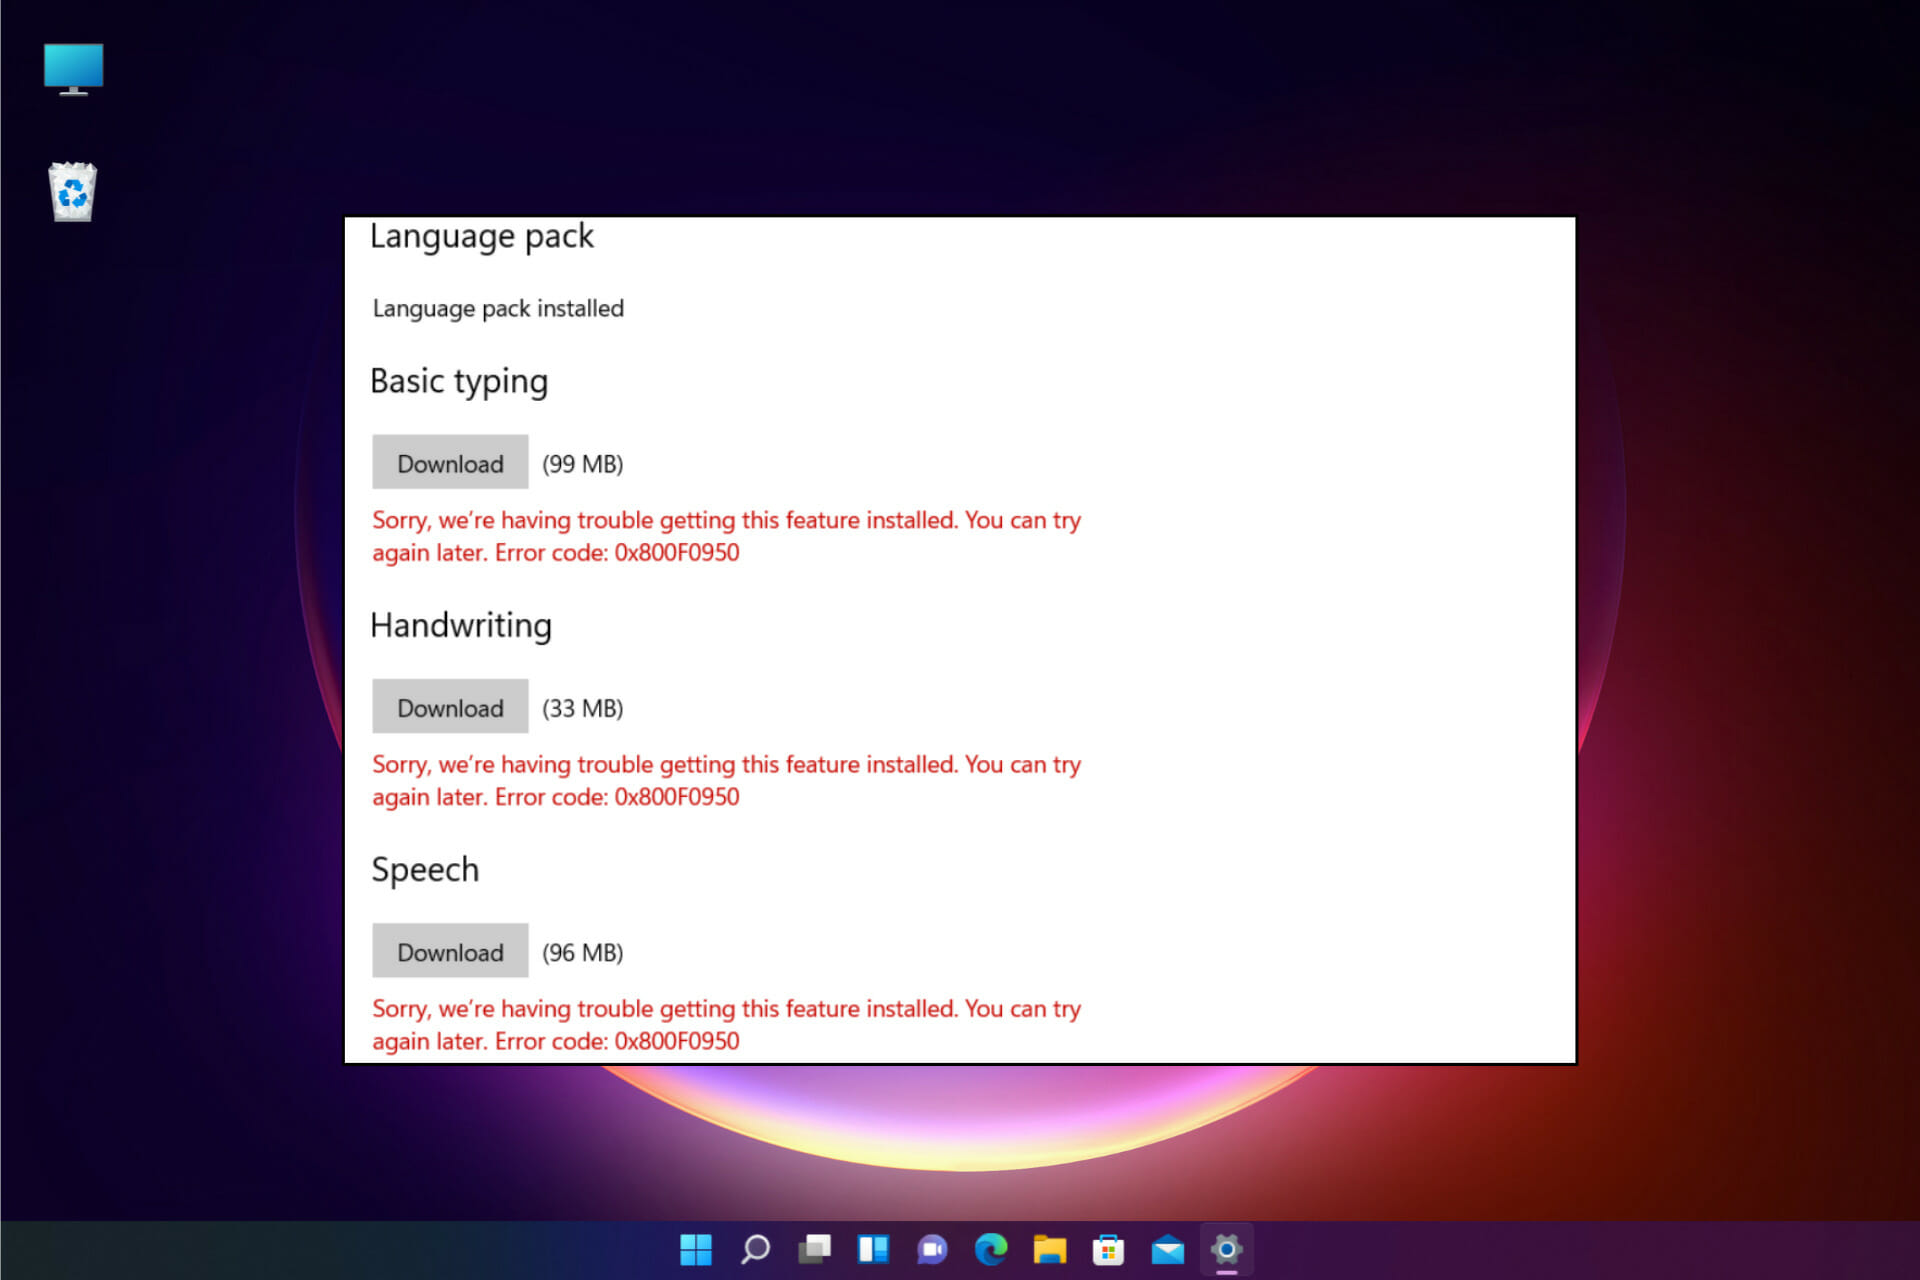 How to fix error code 0x800f0950 language pack in Windows 11